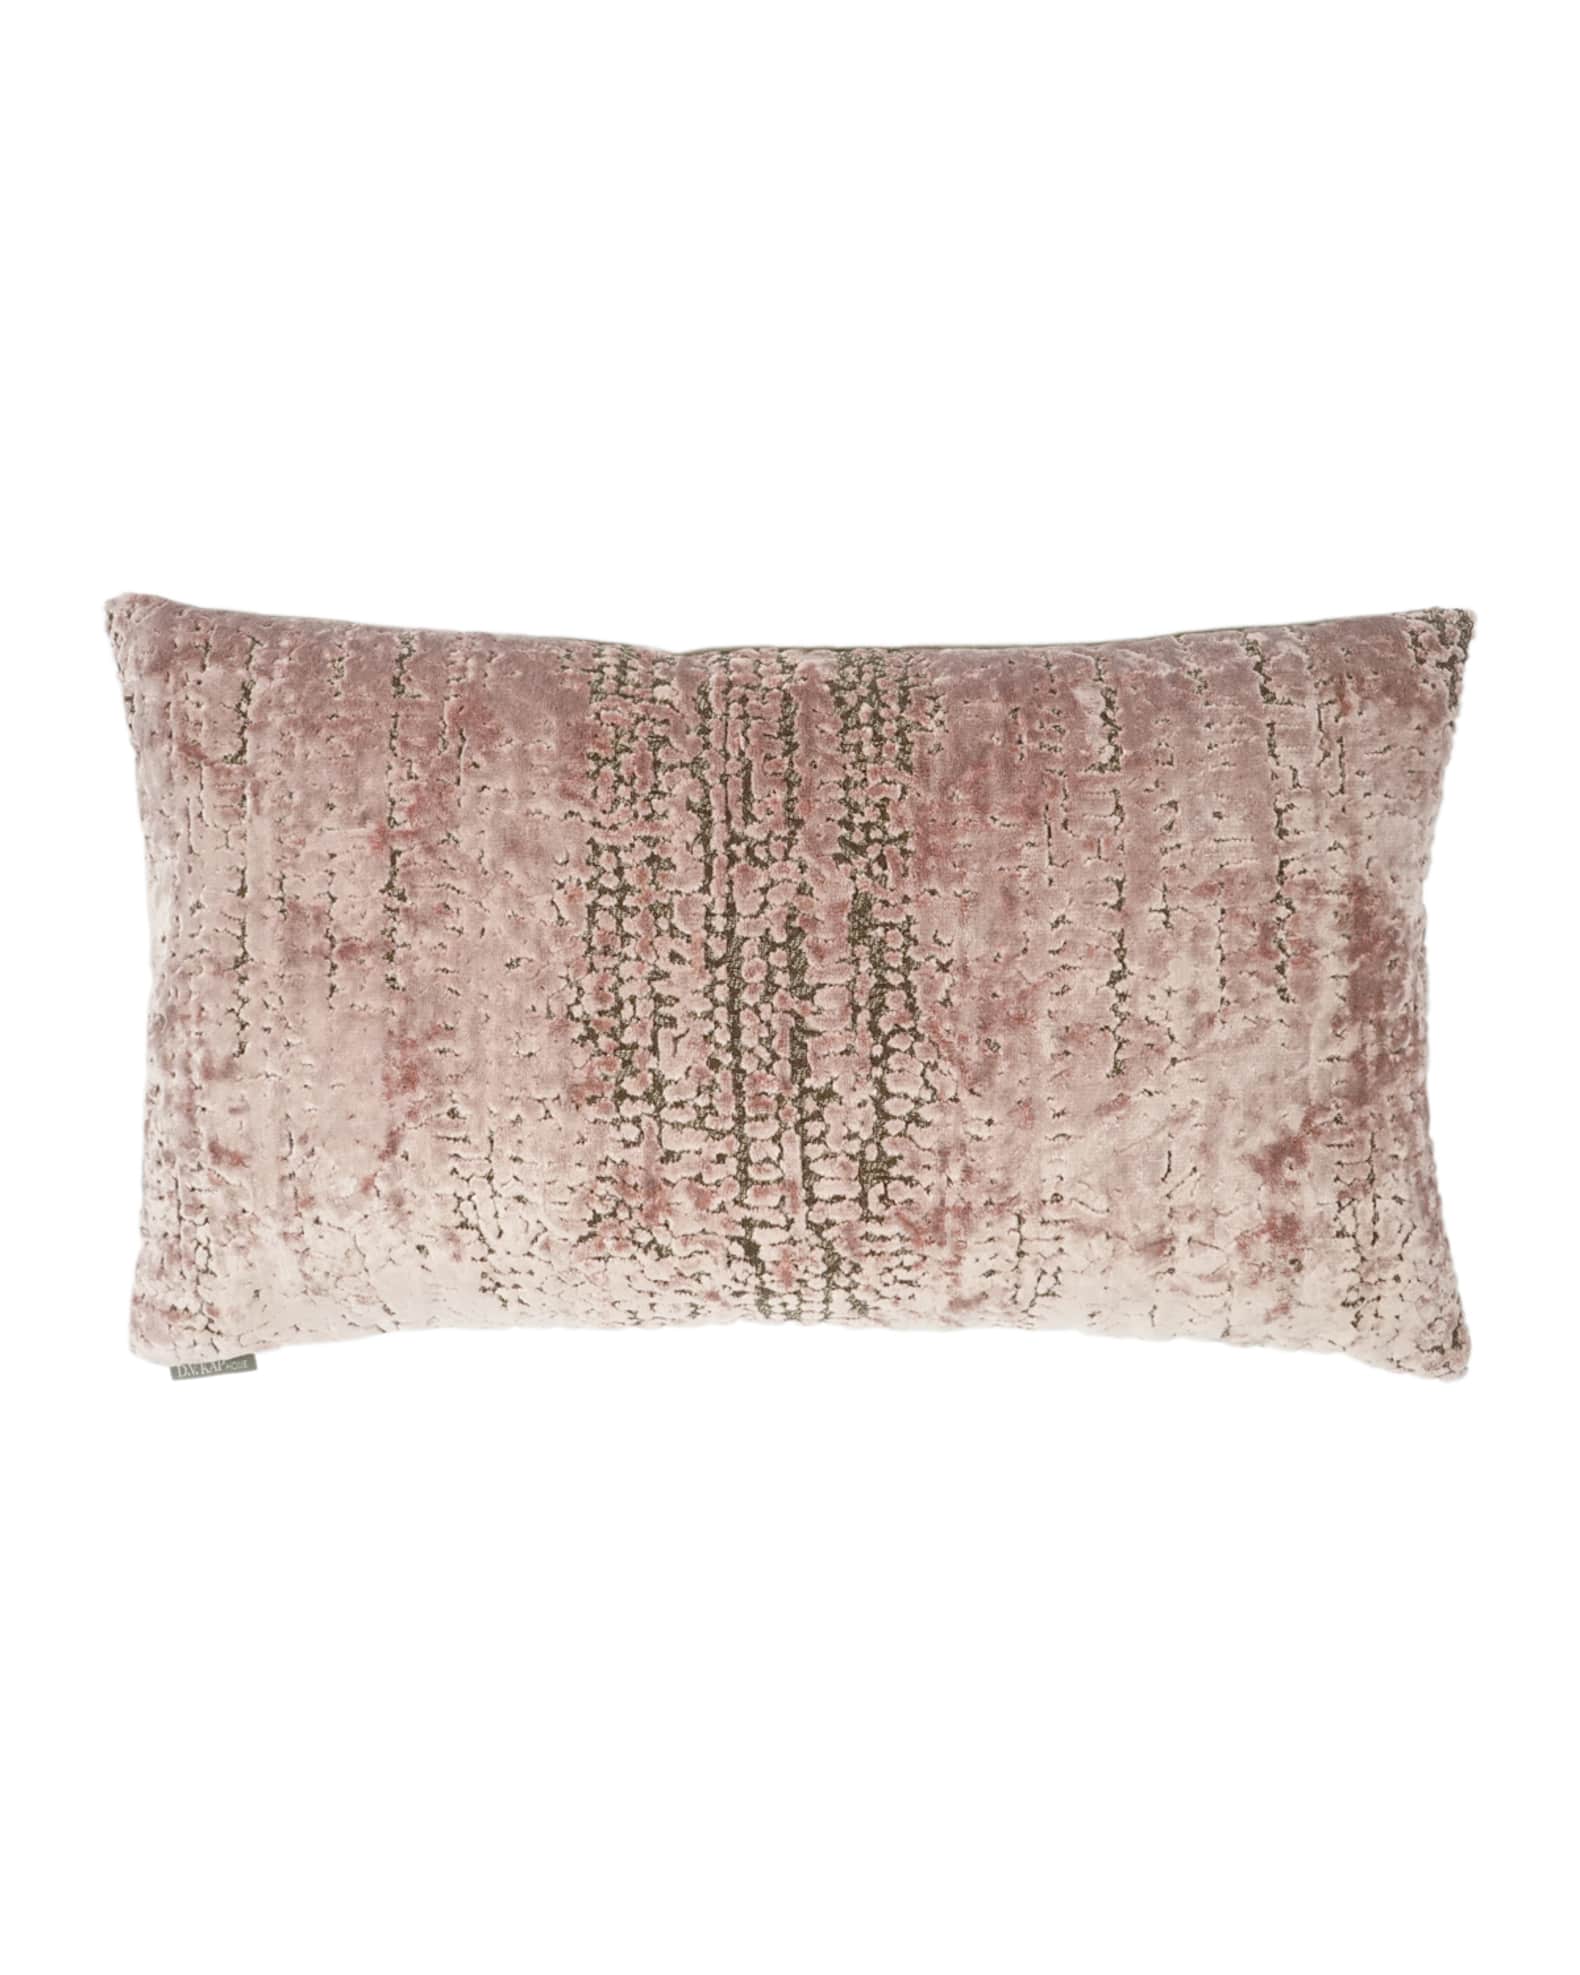 Velluto Decorative Pillow, Luxury Velvet Throw Pillows